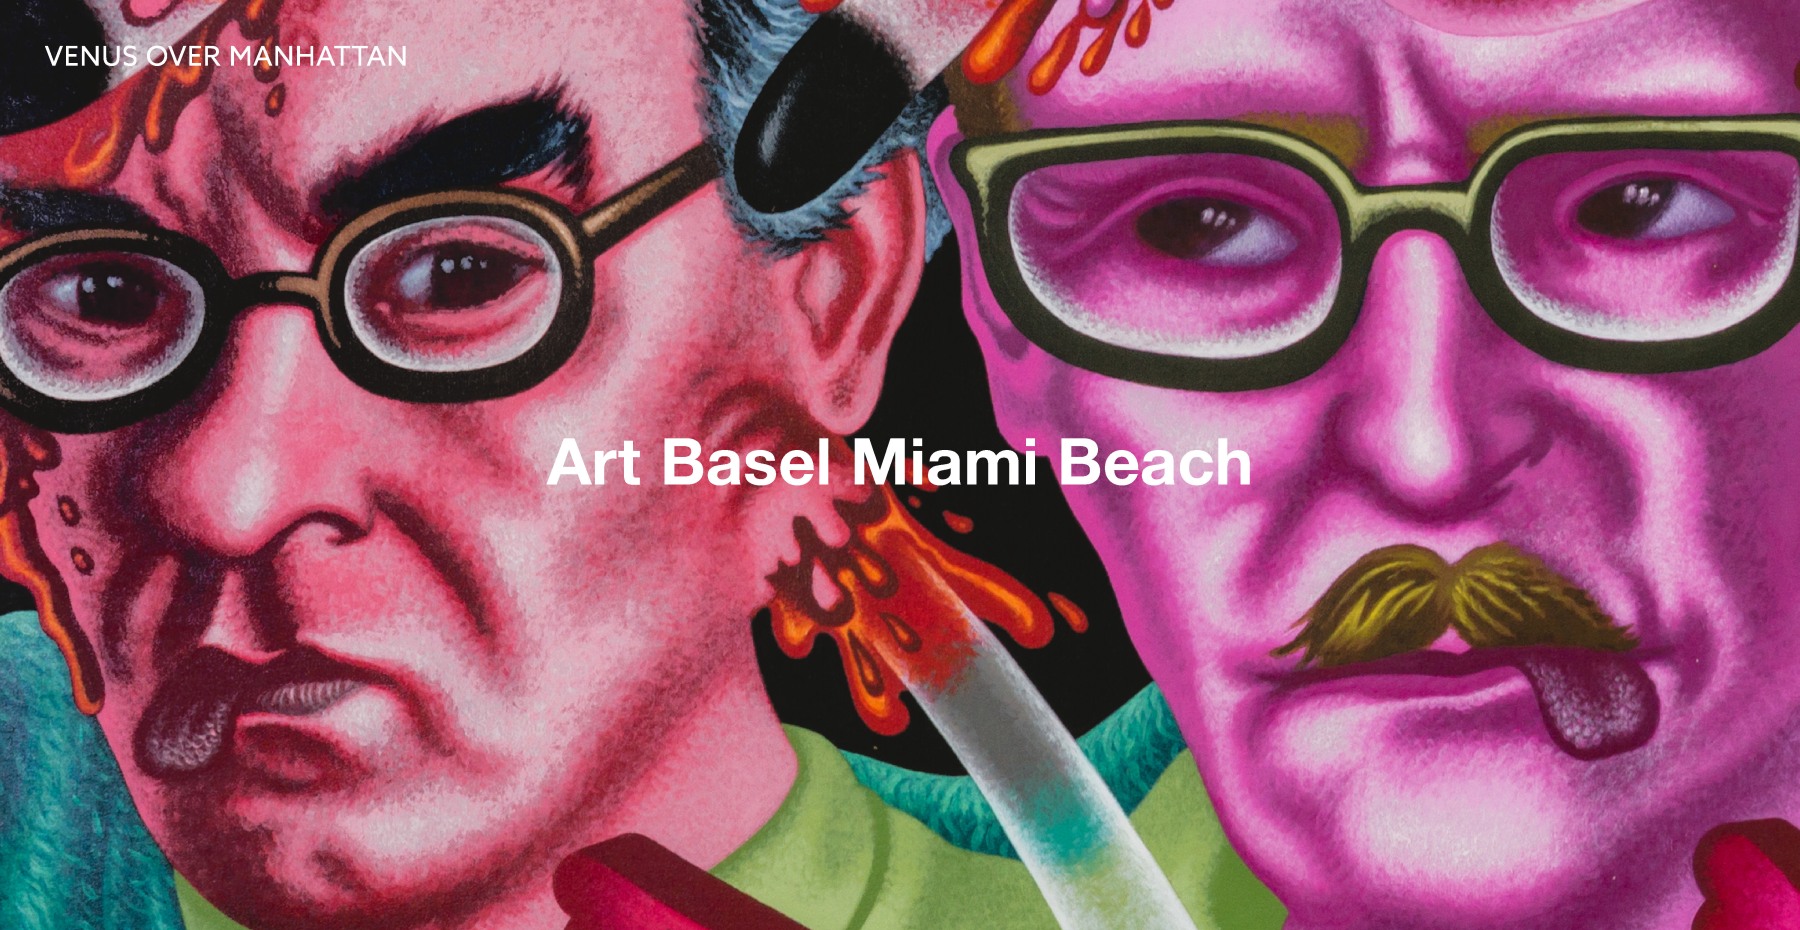 Art Basel Miami Beach 2022 - Miami Beach Convention Center | Booth F5 - Viewing Room - Venus Over Manhattan Viewing Room